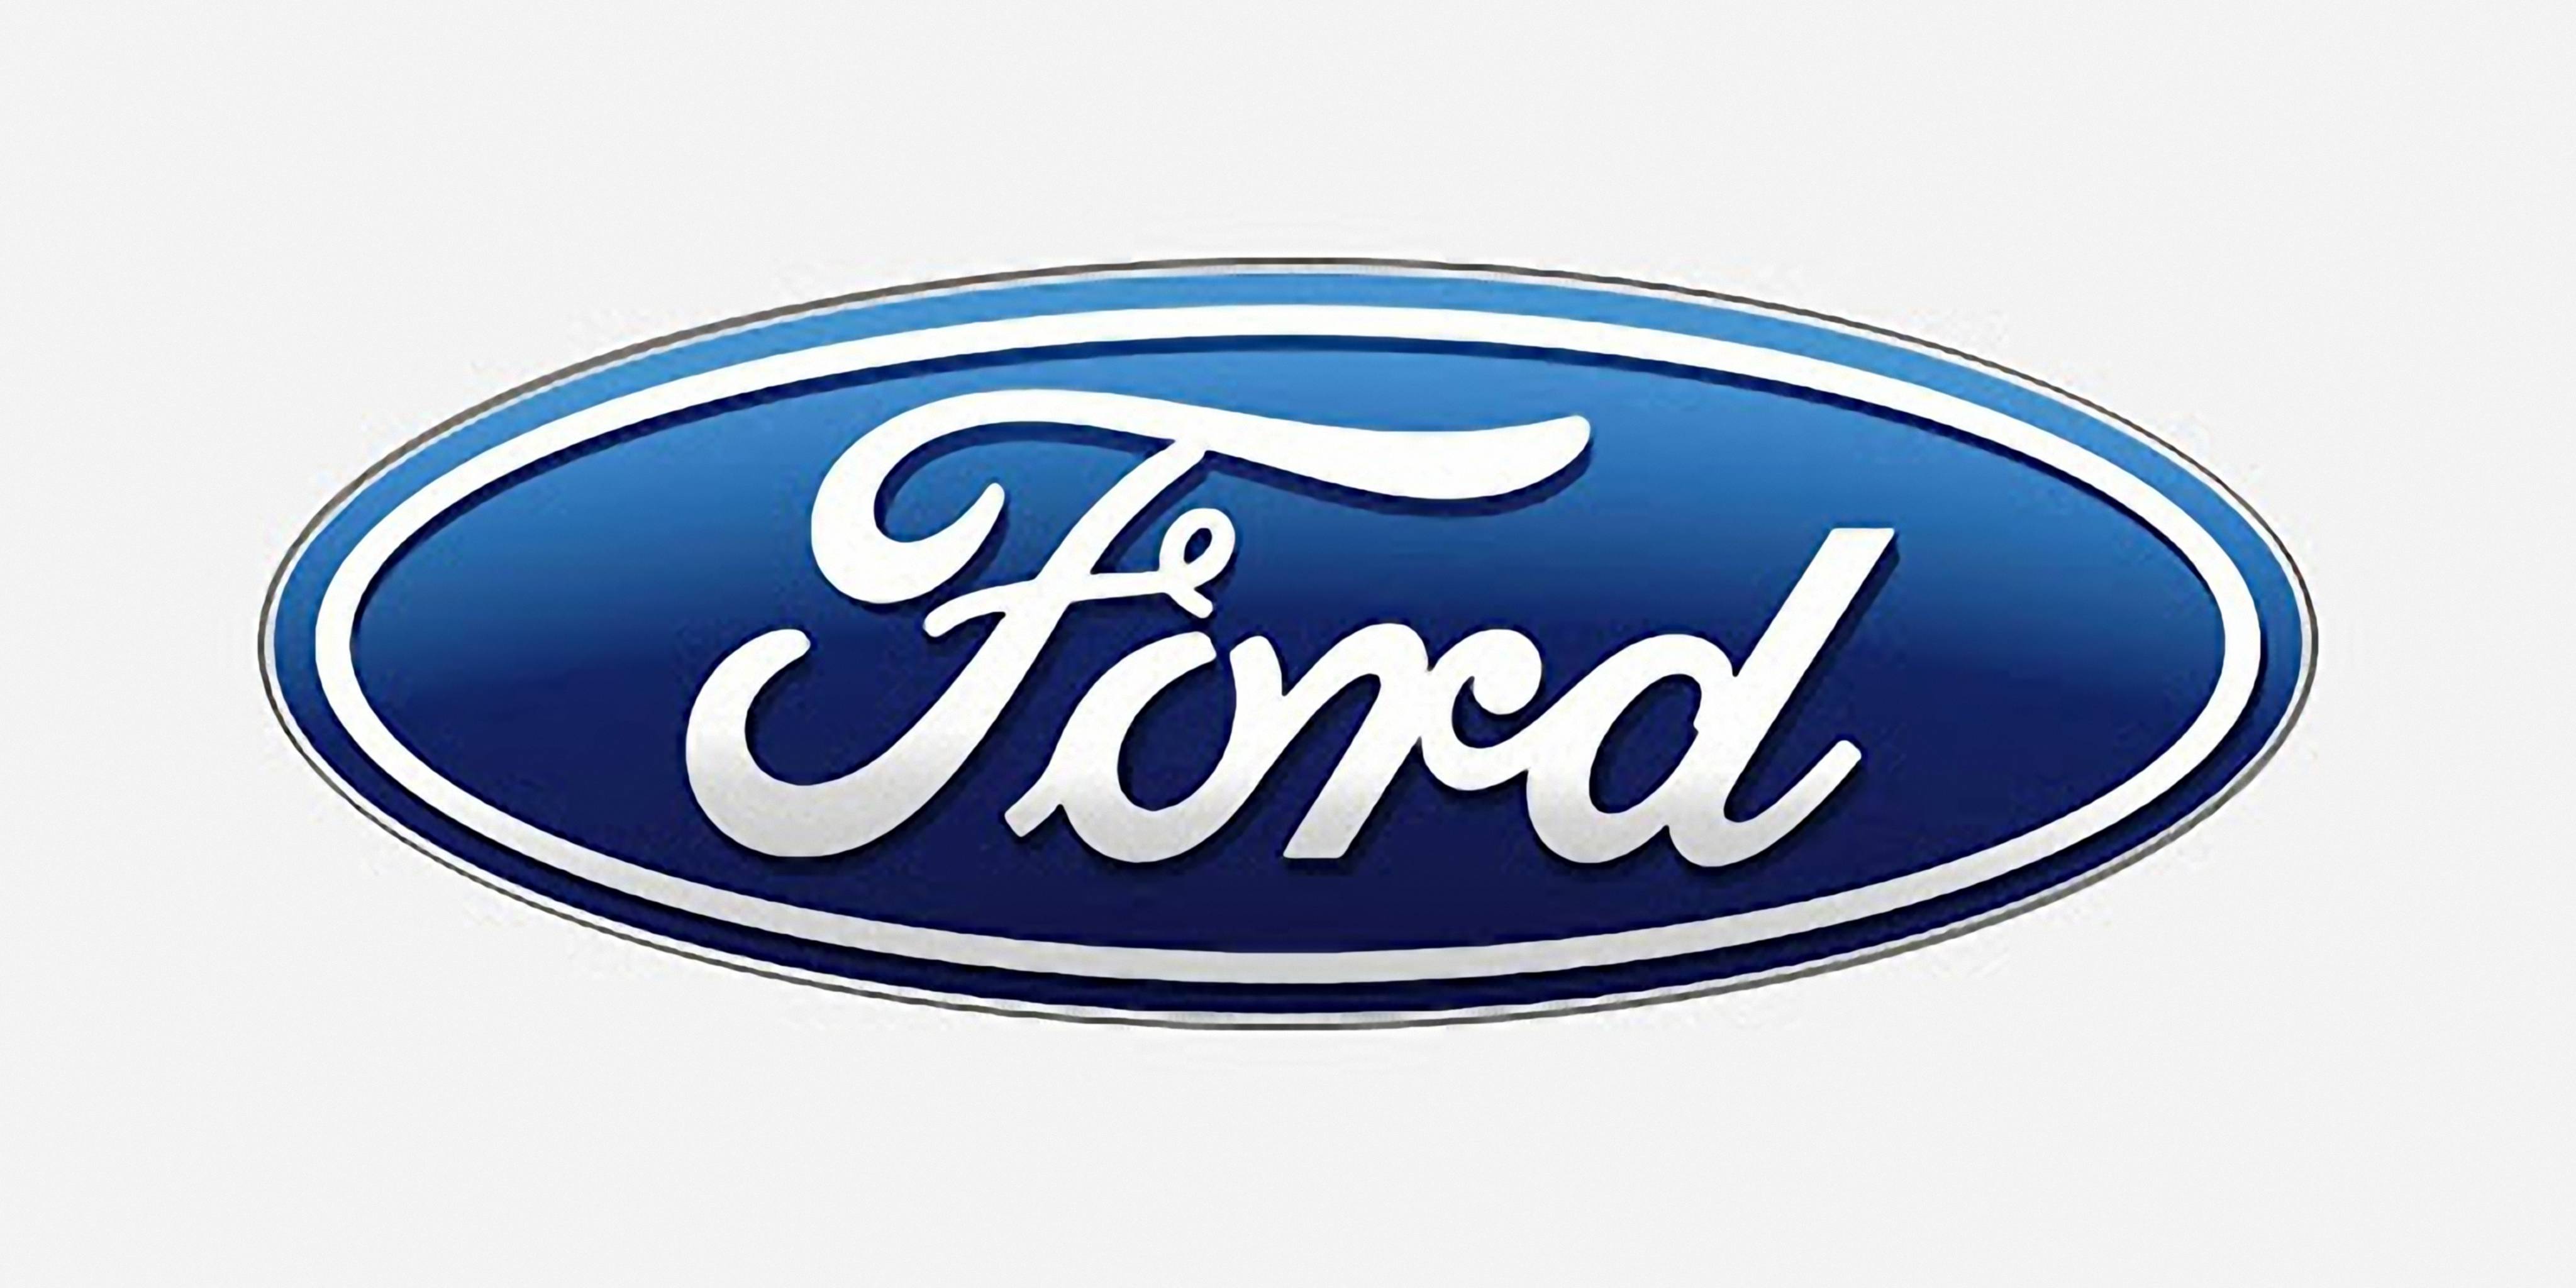 Ford Logo Free Wallpaper Widescreen. ardiwallpaper